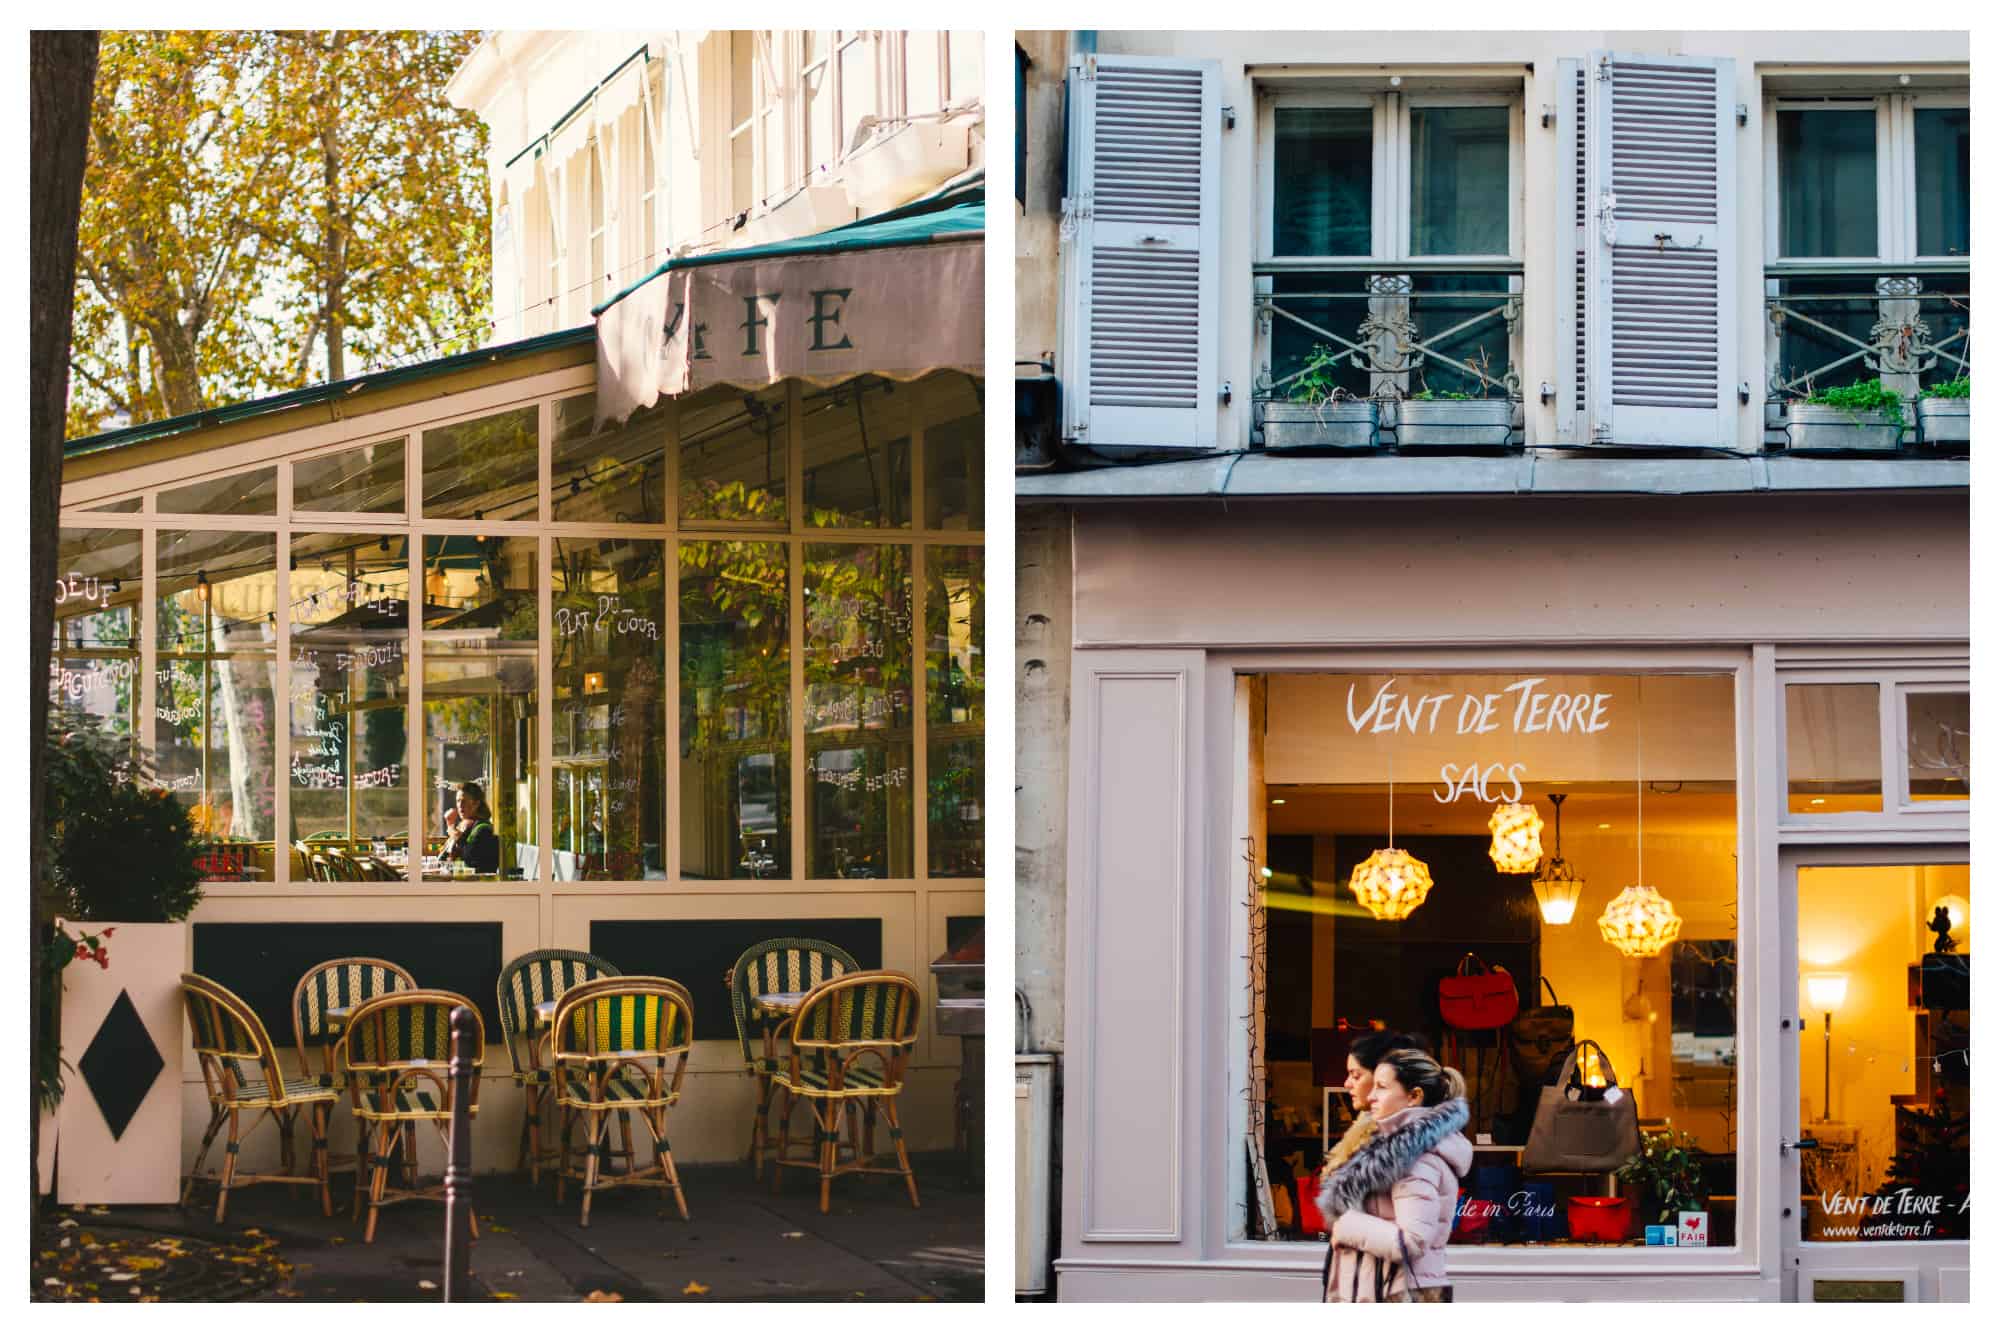 On left: Empty chairs on a café terrace await diners for an apéritif in Paris. On right: Vent de Terre, on Île Saint Louis in Paris, sells handbags designed in France.